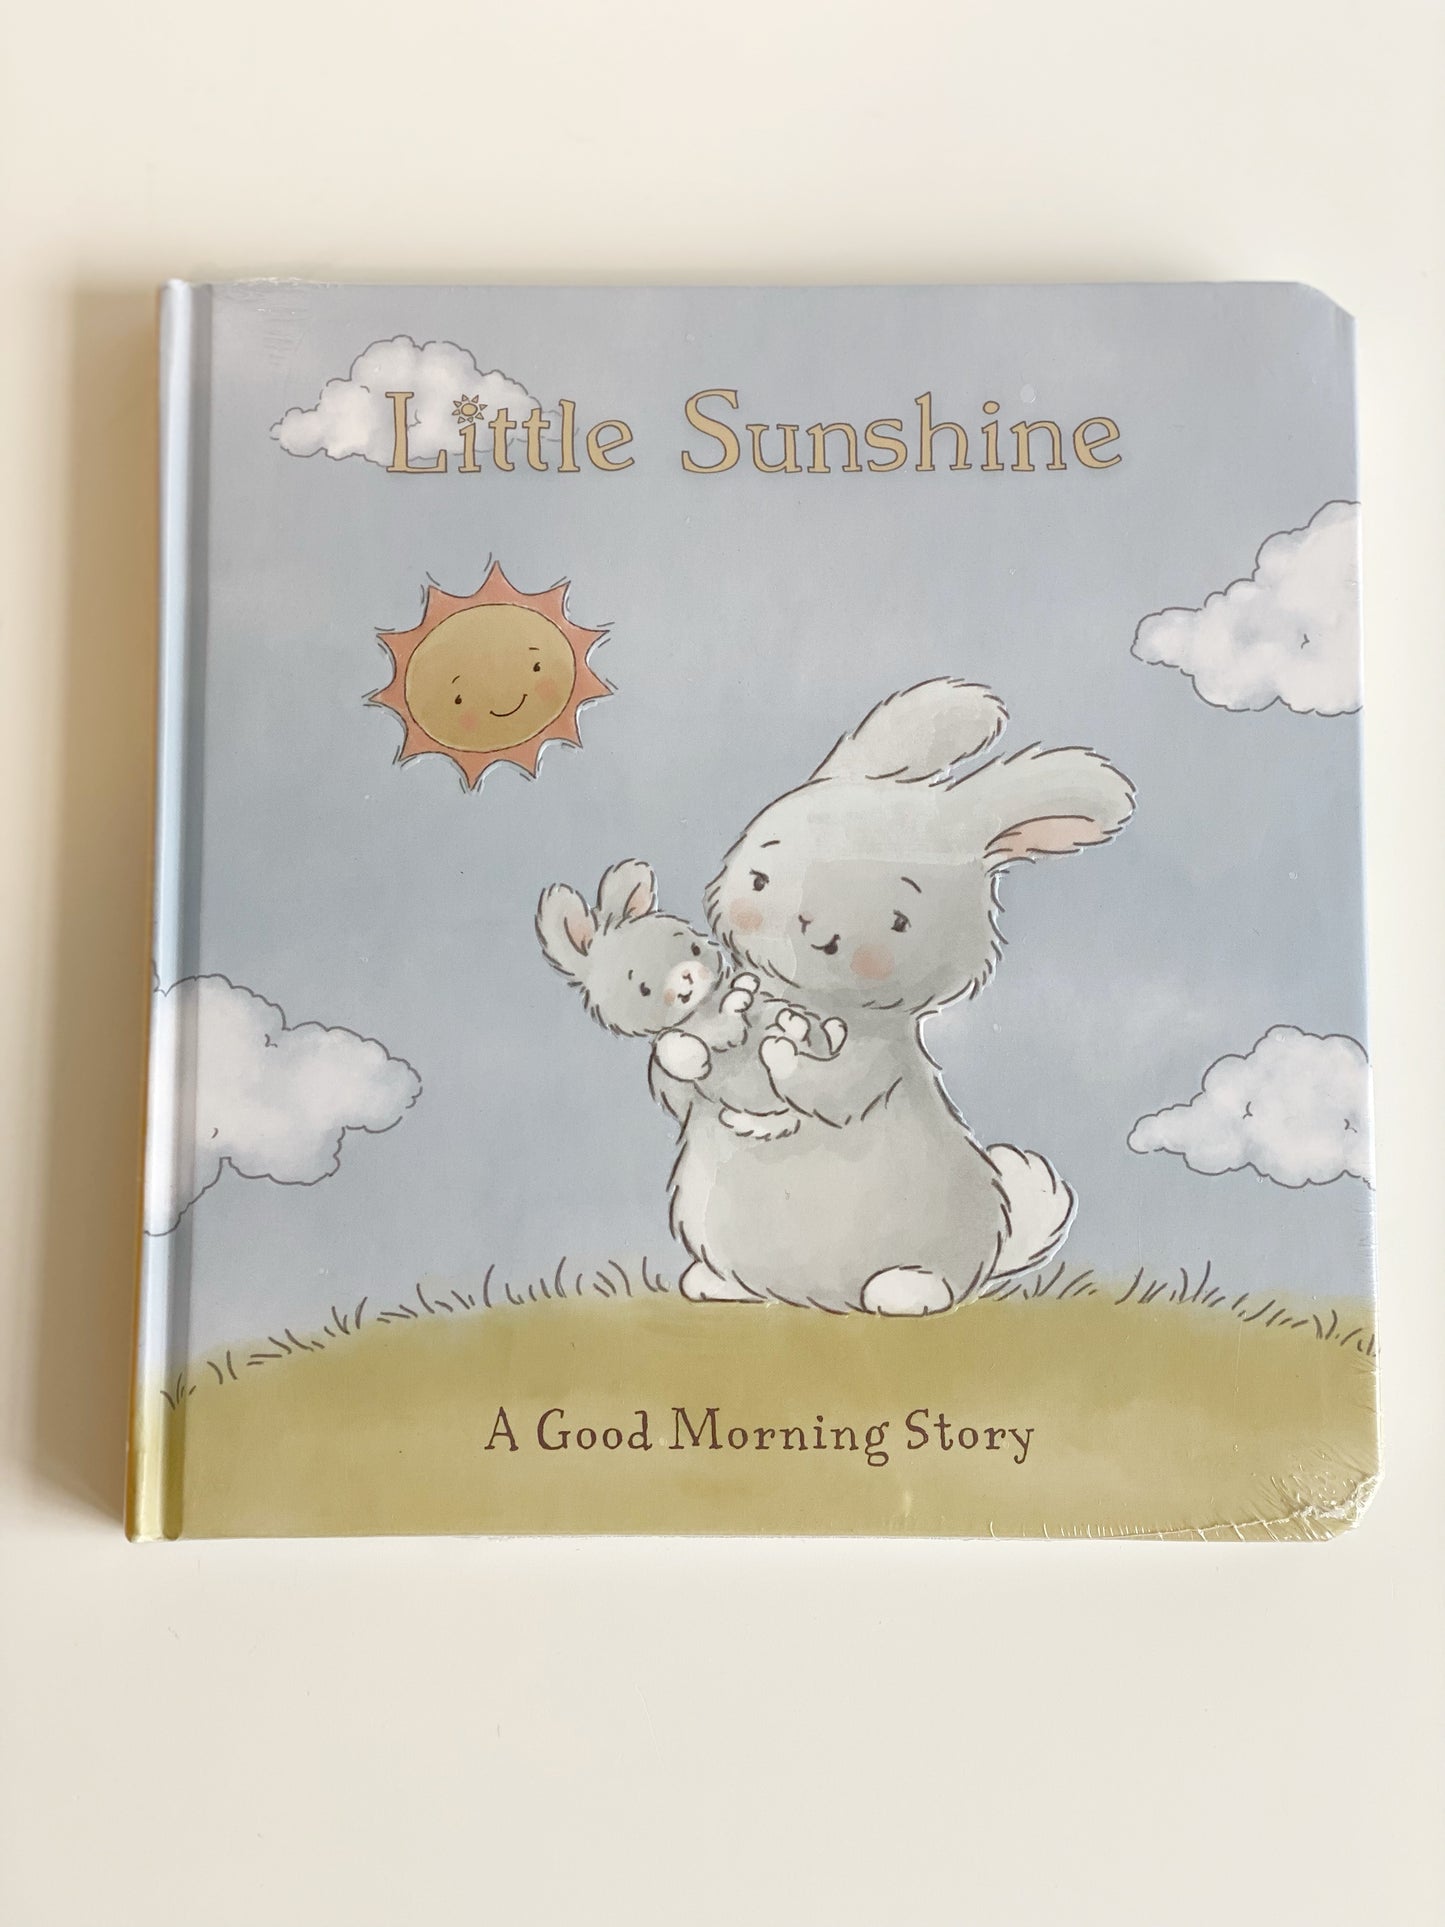 Little Sunshine Book - A Good Morning Store.